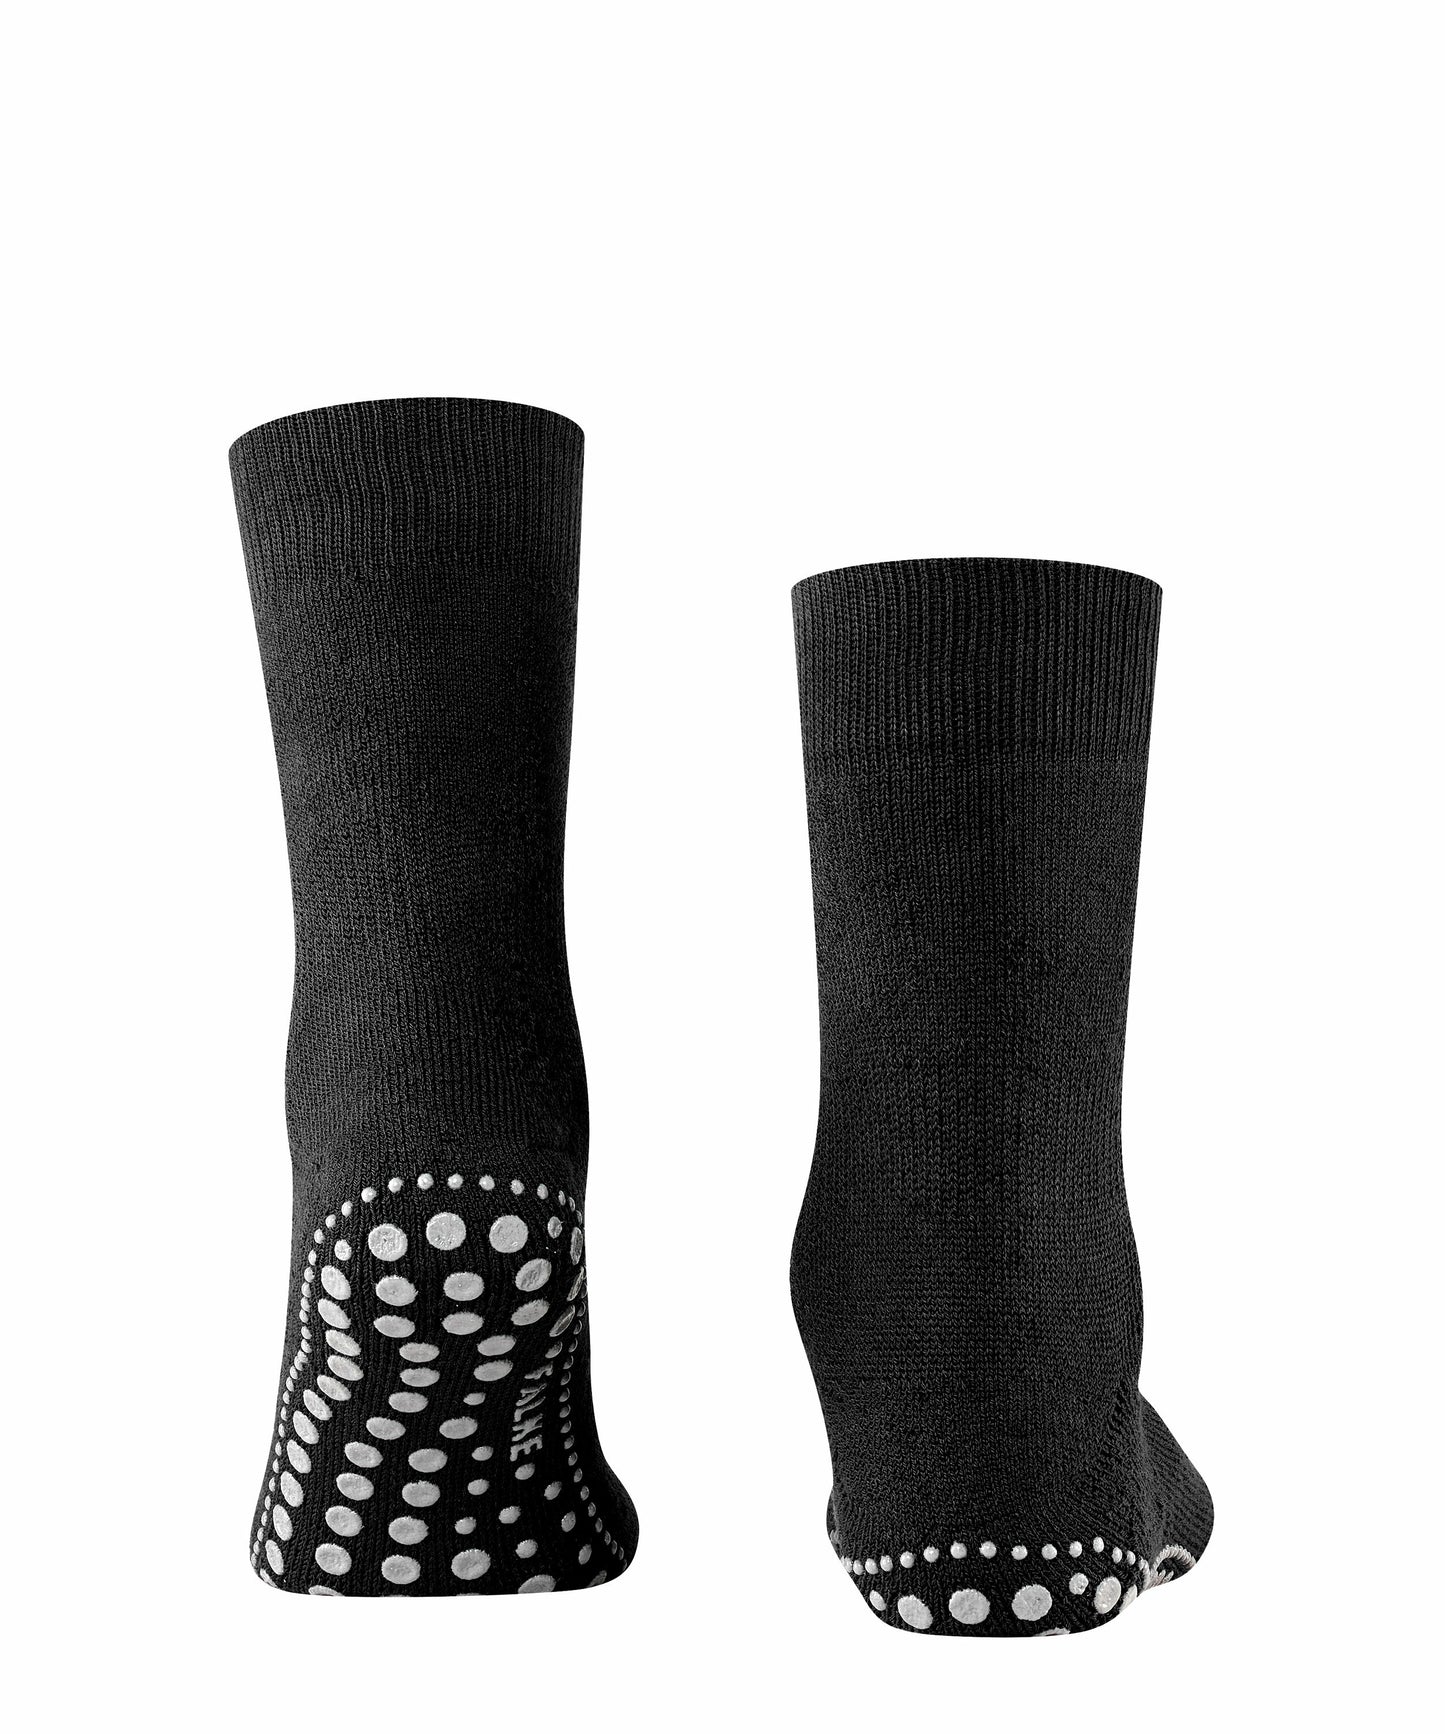 Socken Homepads (Black)